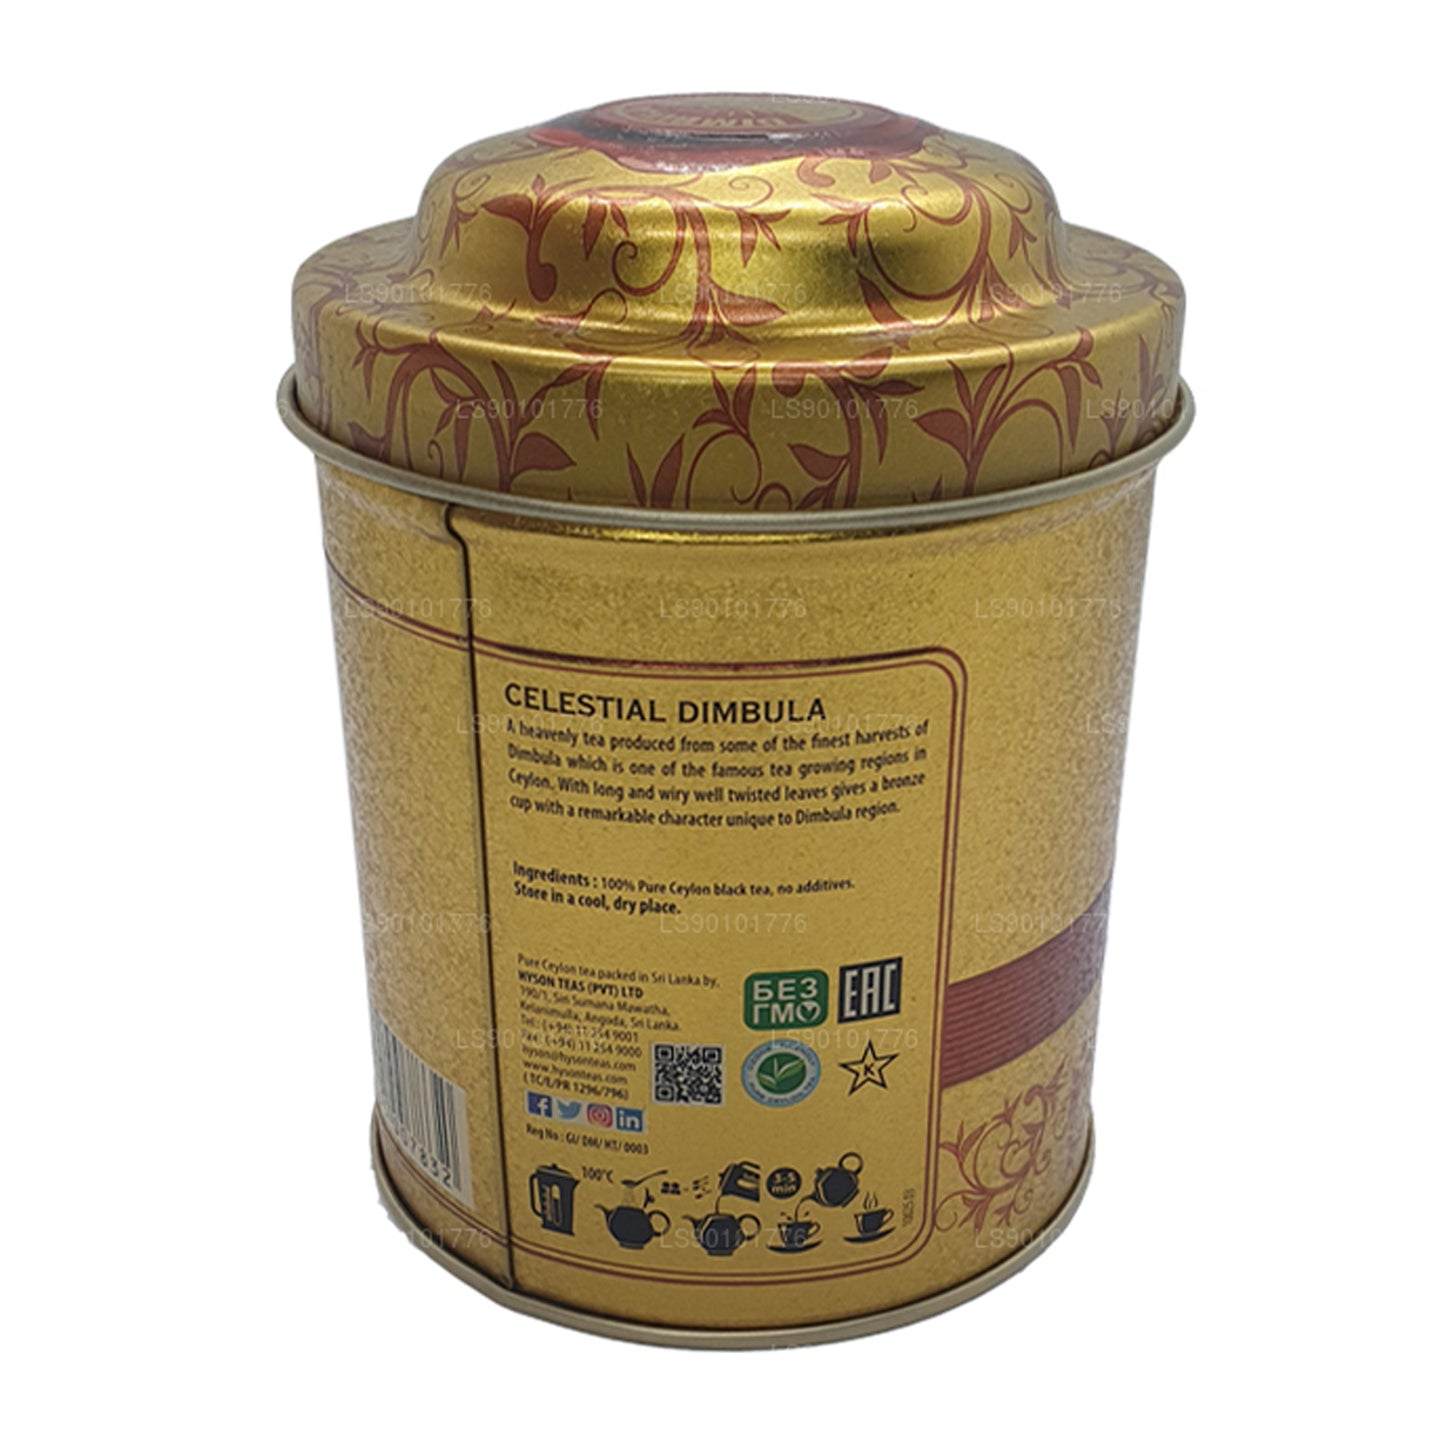 Hyson Exquisite Celestial Dimbula Leaf Tea (100g)